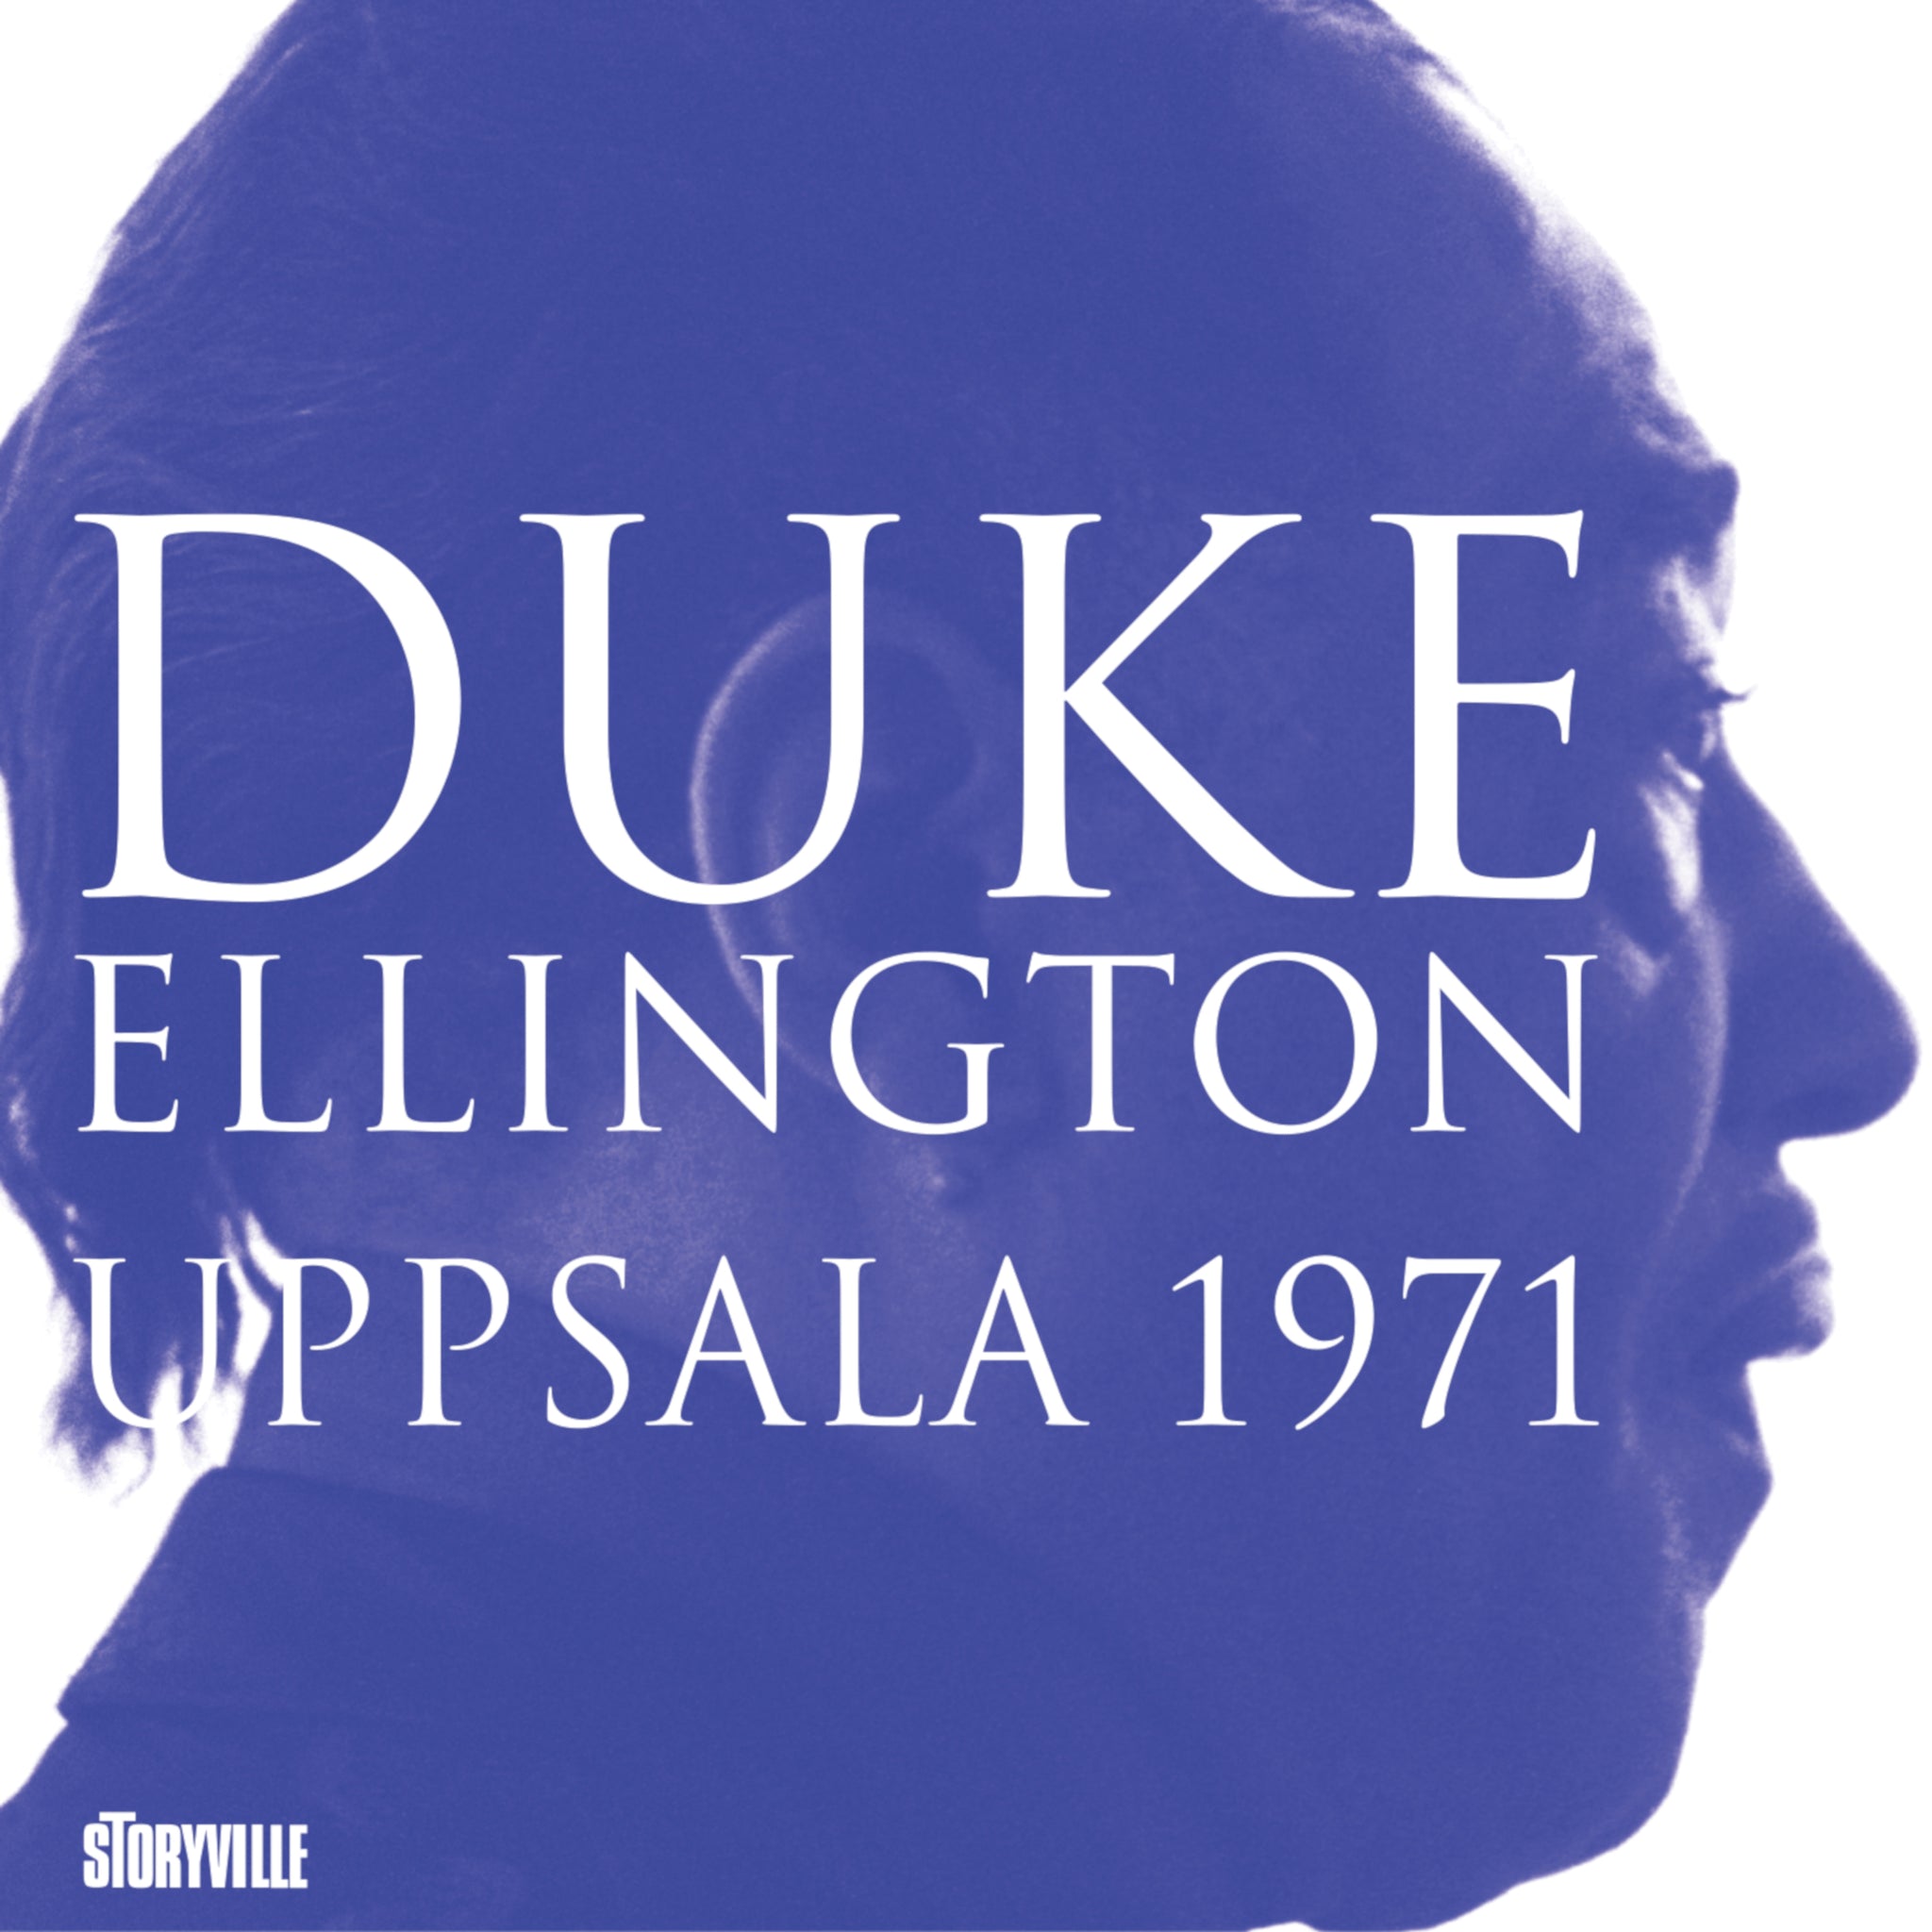 Uppsala 1971 / Duke Ellington and His Orchestra